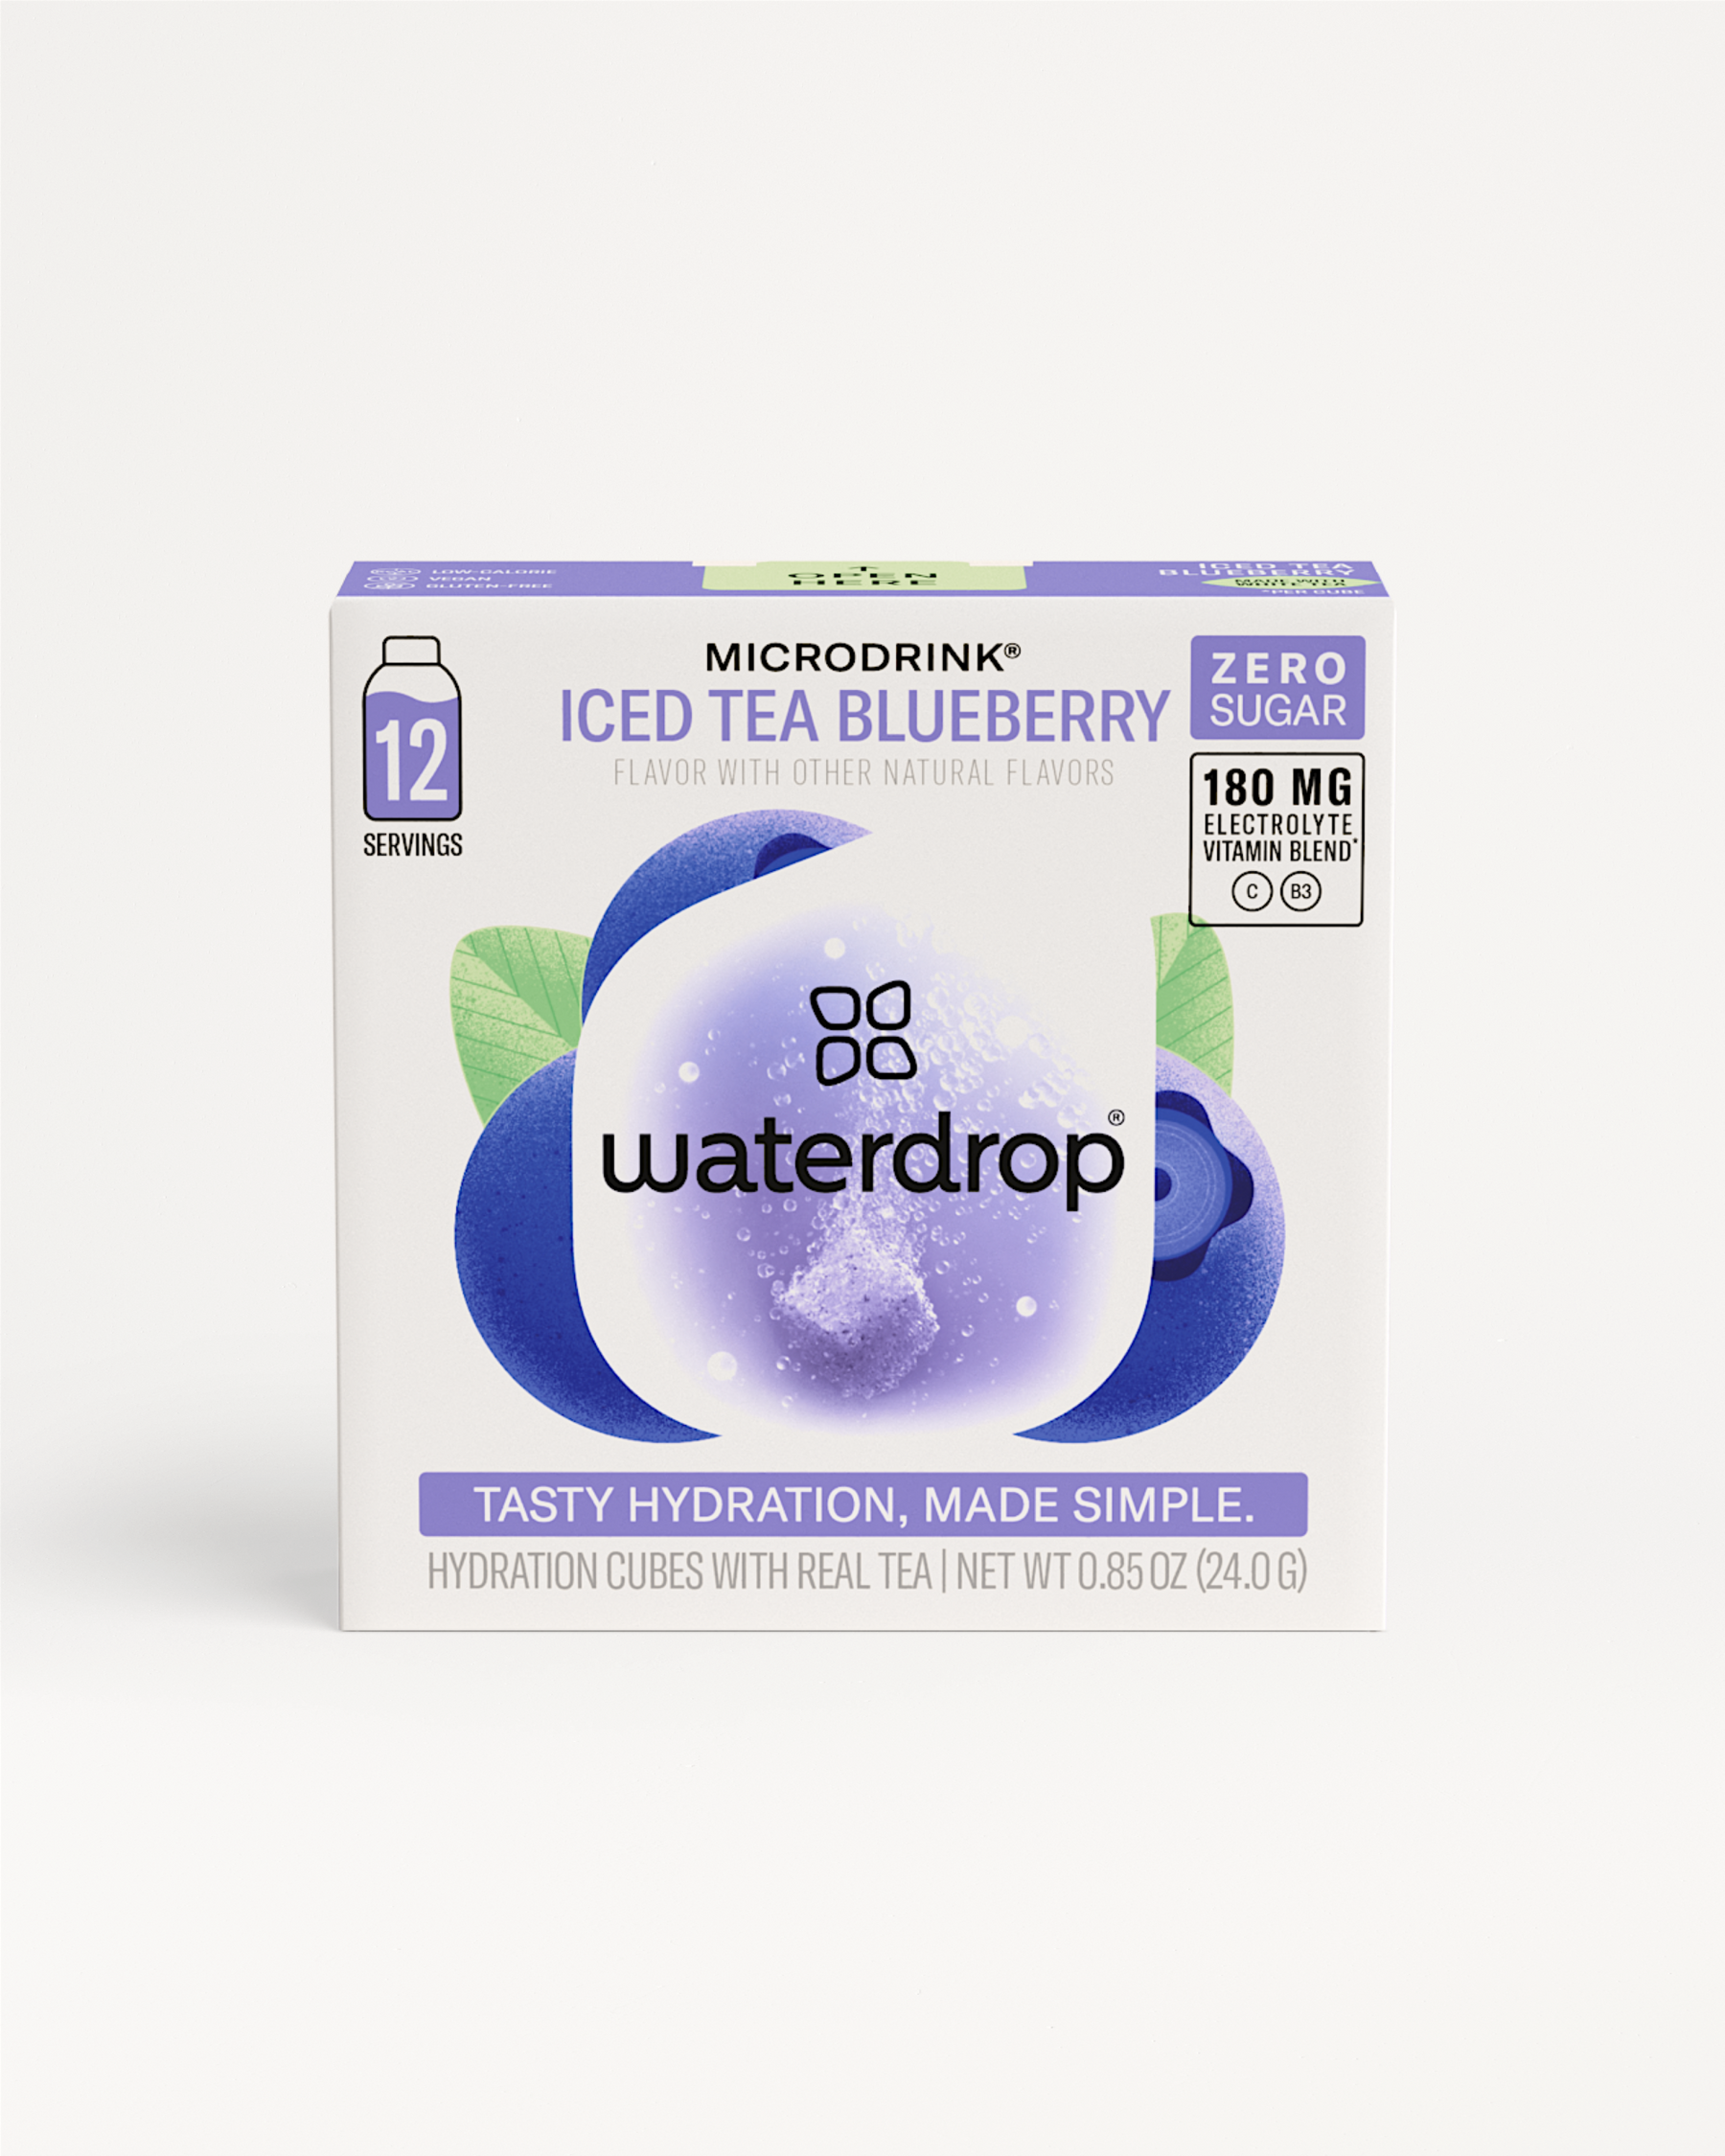 Microdrink ICED TEA BLUEBERRY: Order now | waterdrop®